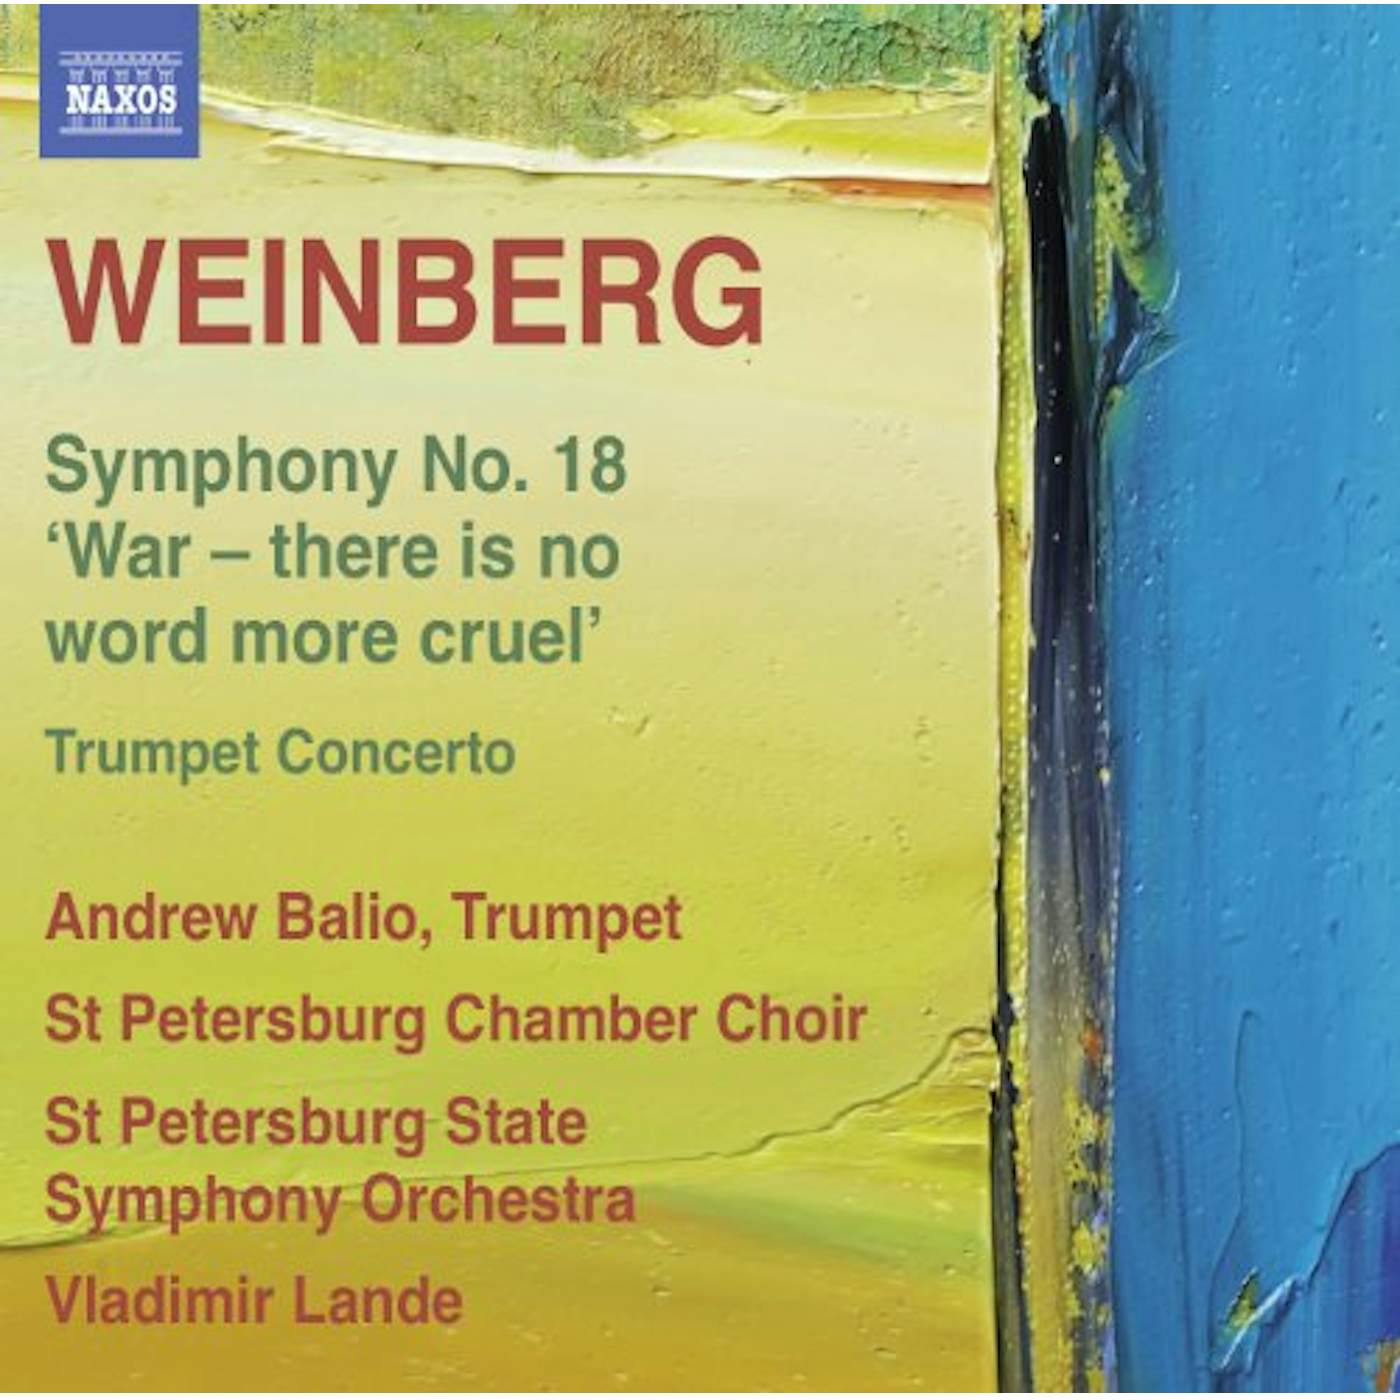 Weinberg SYM 18 CD